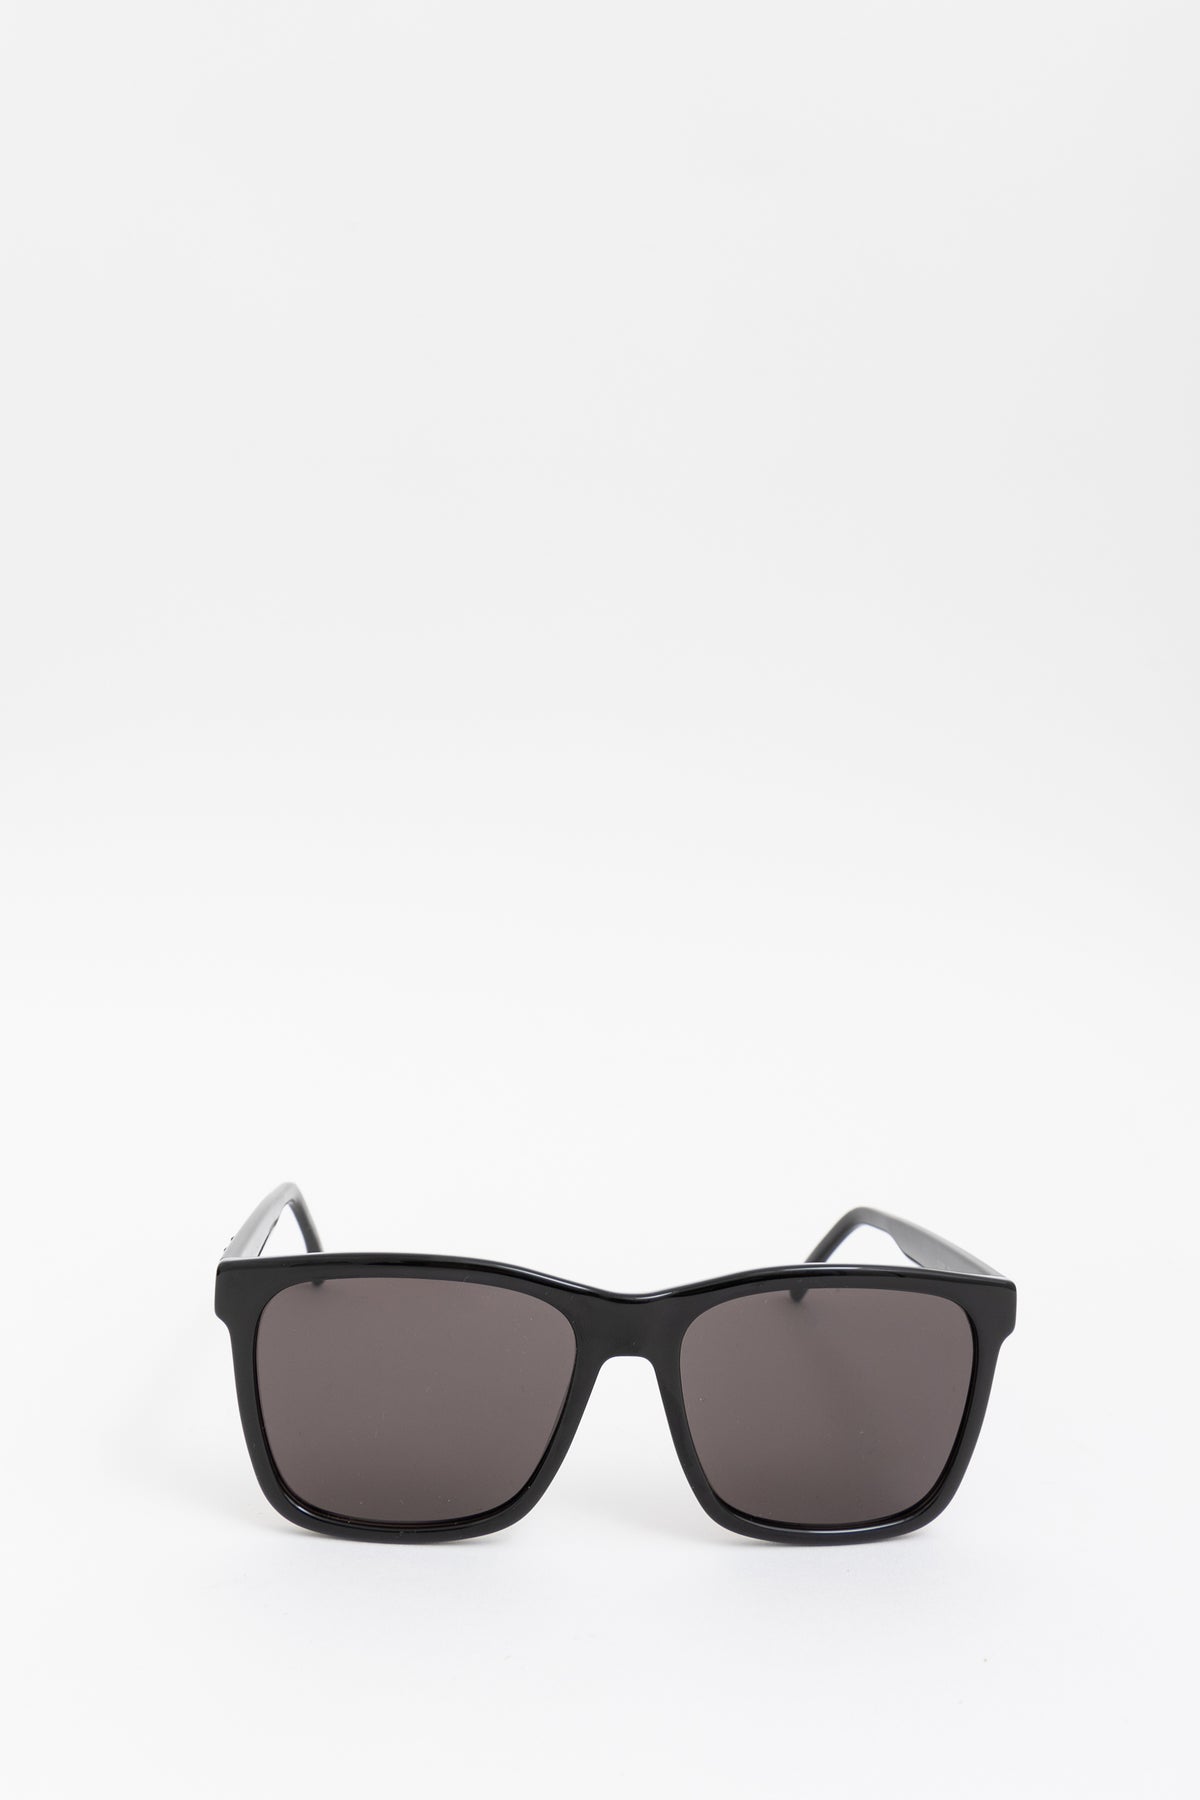 saint-laurent-black-square-sunglasses-with-cursive-logo-91aa